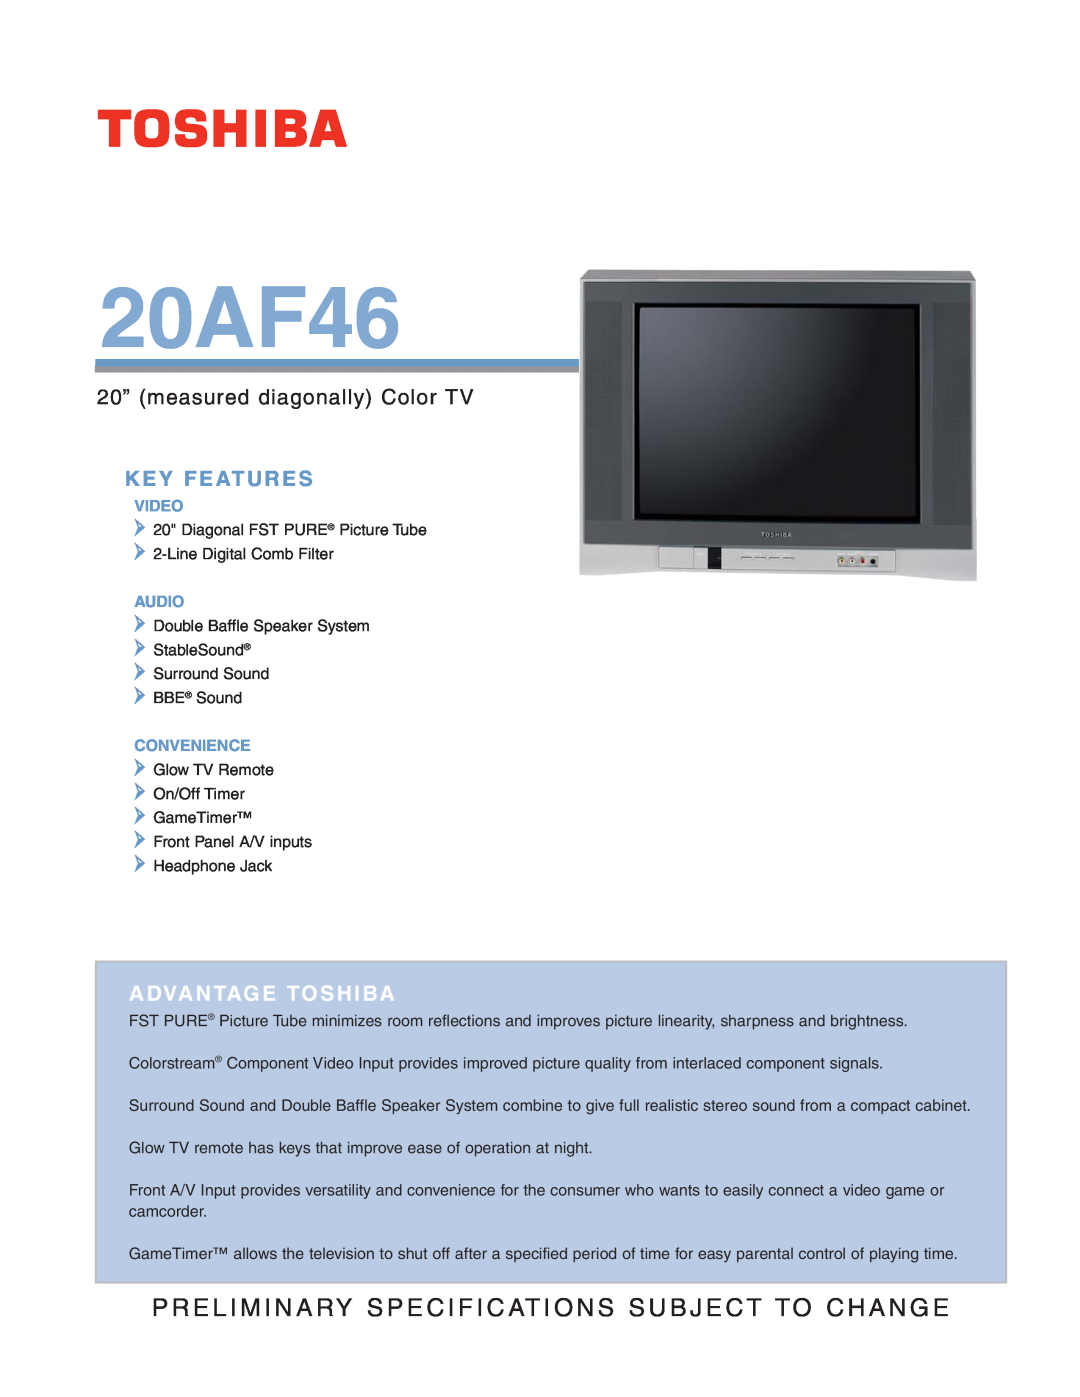 Toshiba 20AF46 specifications Key Features, 20” measured diagonally Color TV, Advantage Toshiba, Video, Audio, Convenience 